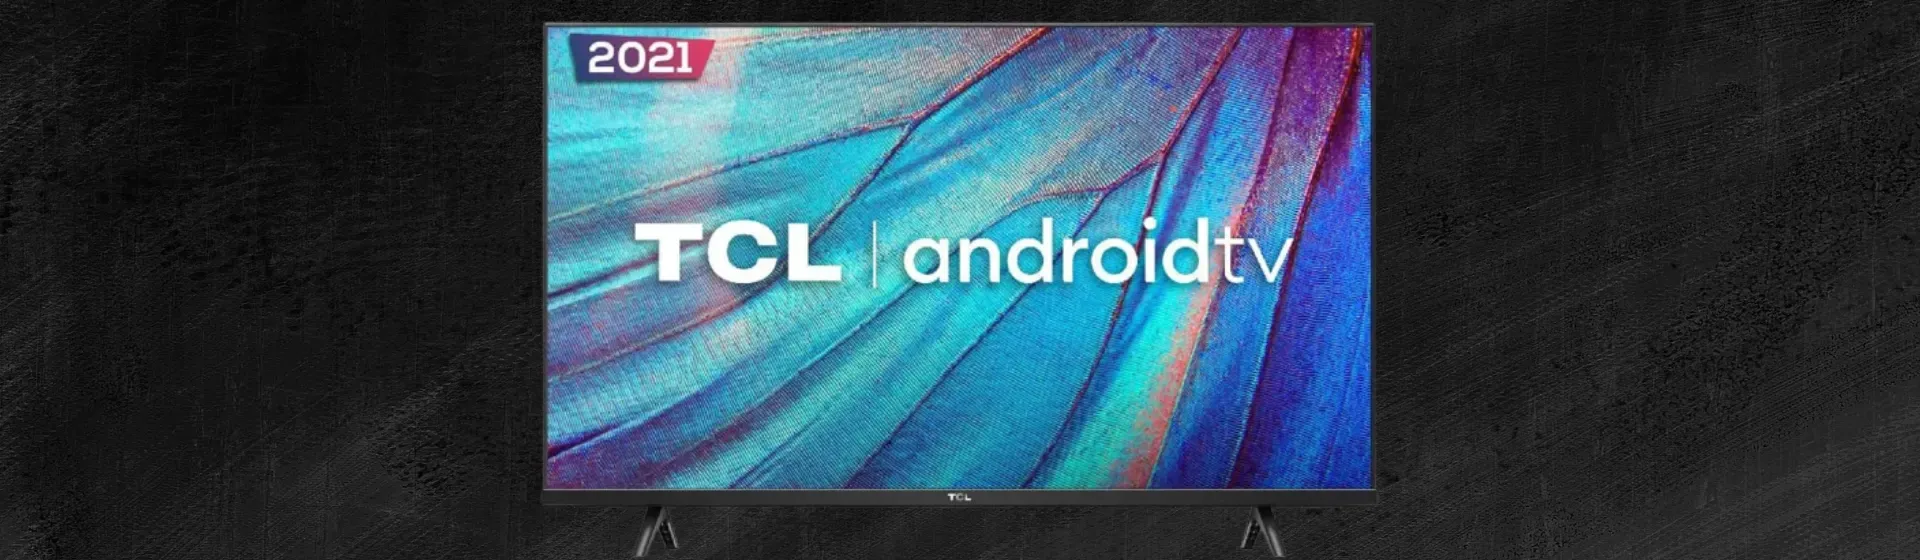 Como instalar os jogos da Playstore da tv TCl android ? 